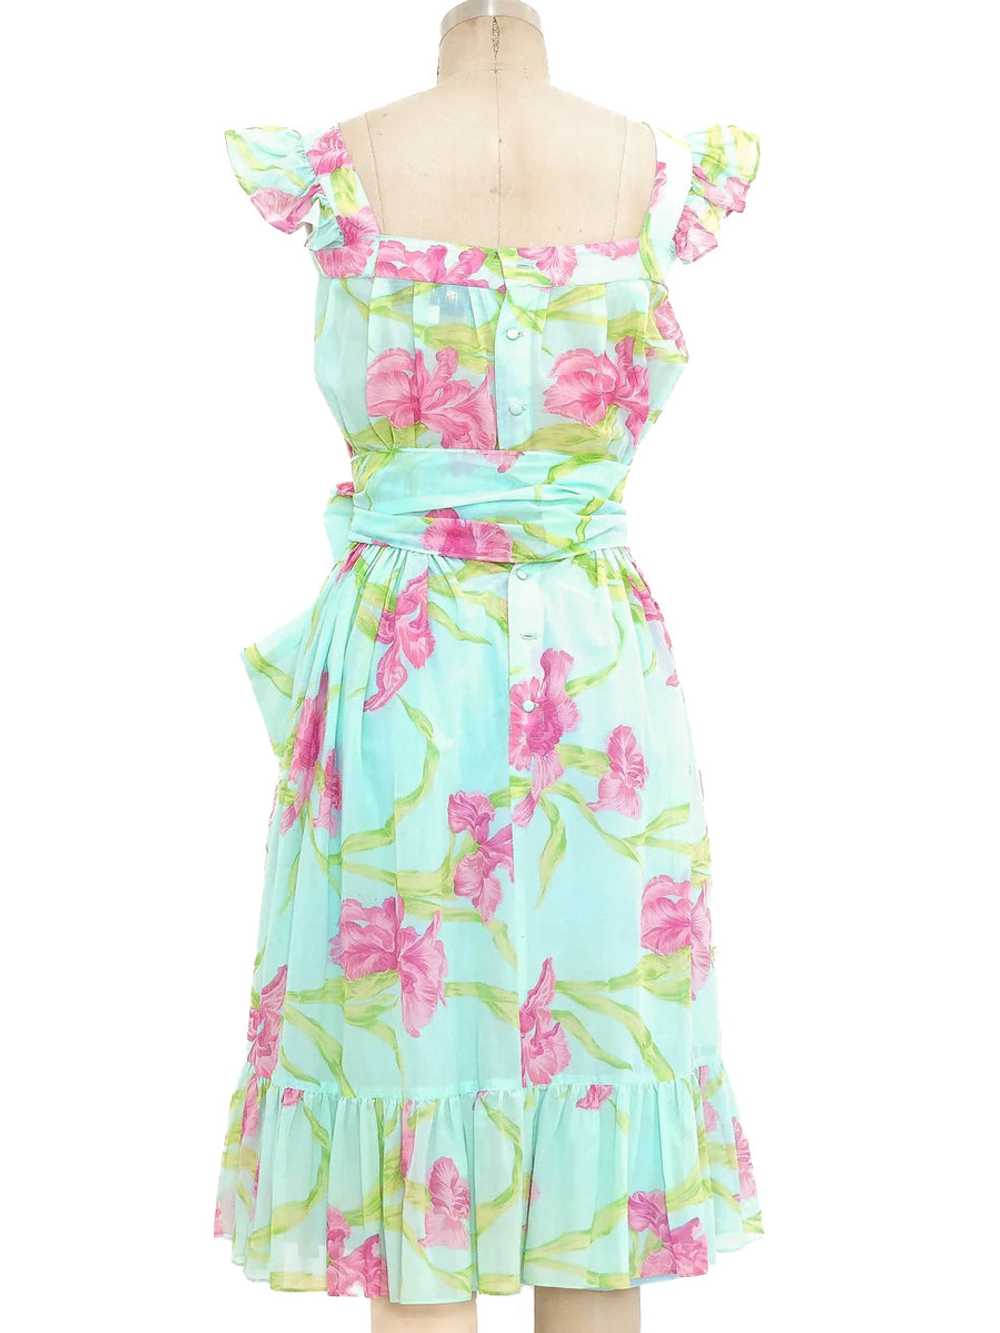 Thierry Mugler Floral Cotton Gauze Ruffle Dress - image 4